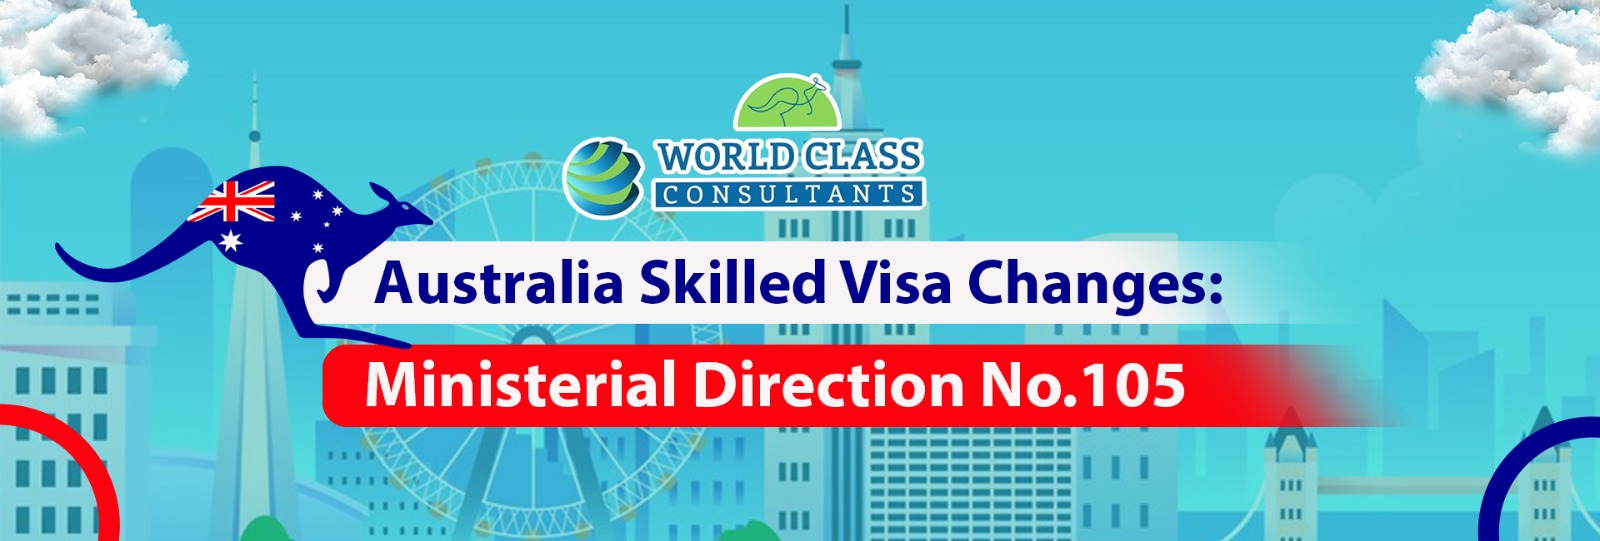 Document titled "Australia Skilled Visa Changes: Ministerial Direction NO. 105" outlining updates to the skilled visa program